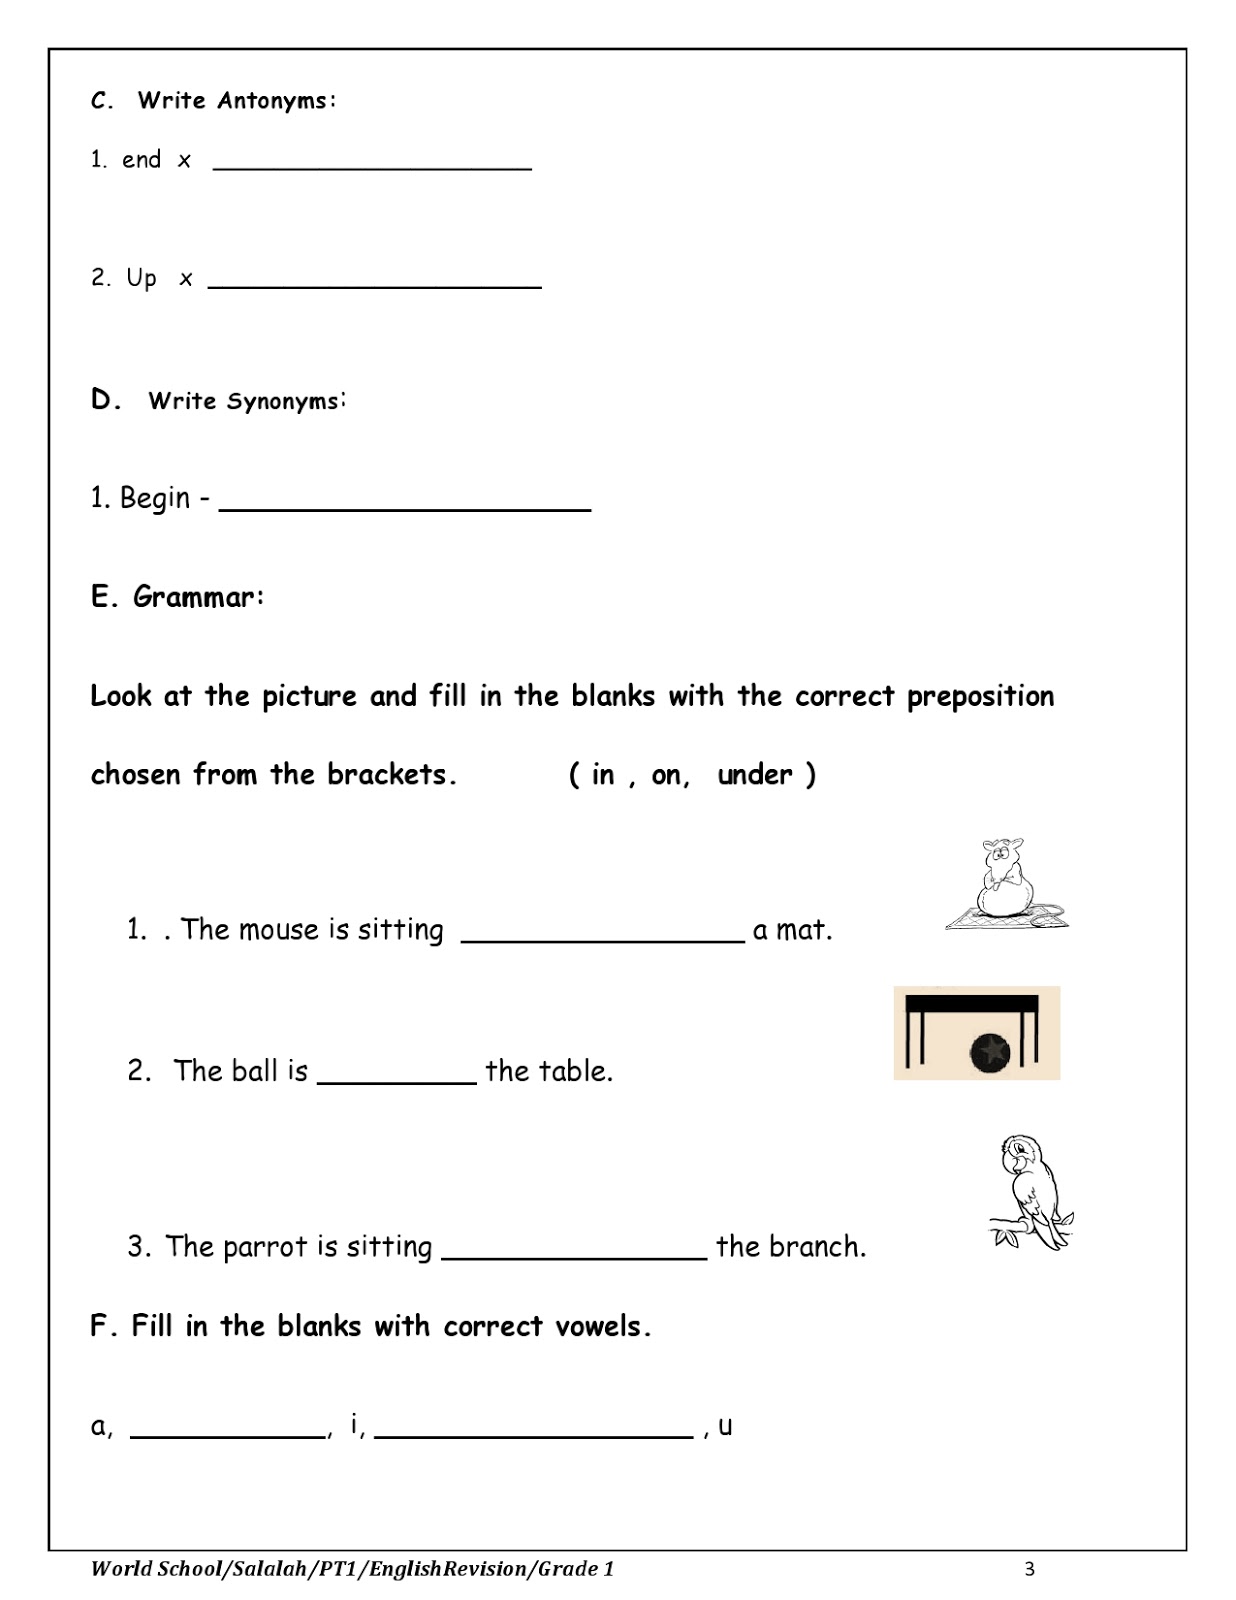 birla-world-school-oman-revision-worksheet-for-grade-1-as-on-03-10-2019